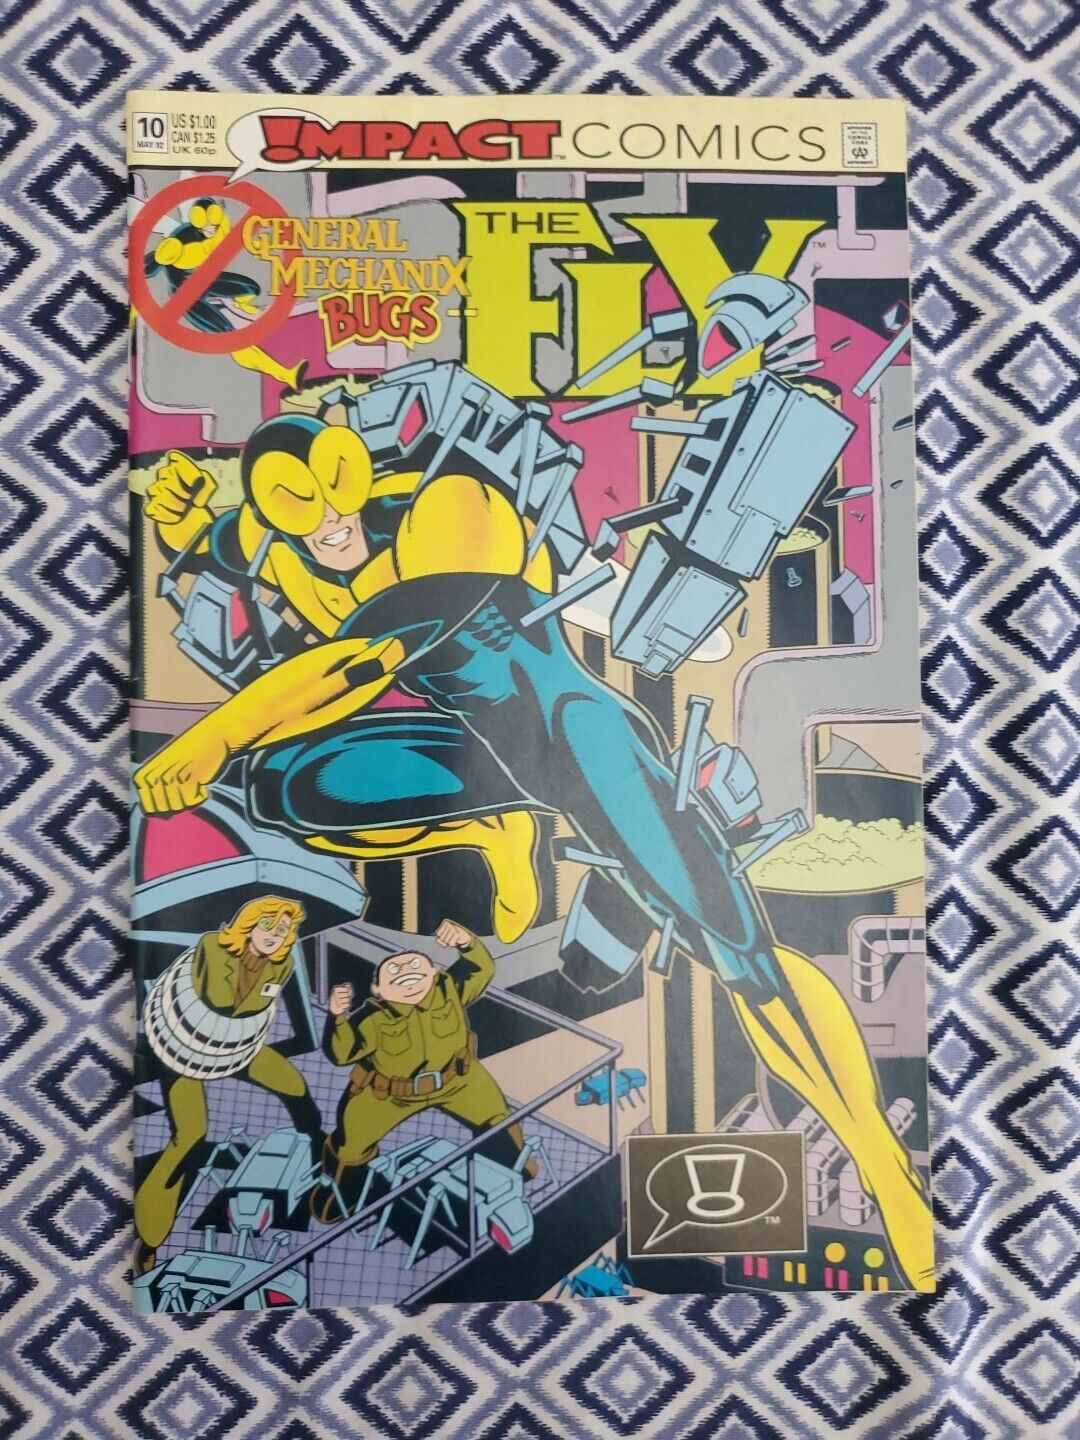 1992 The Fly NO. 10 Comic Book - Impact Comics